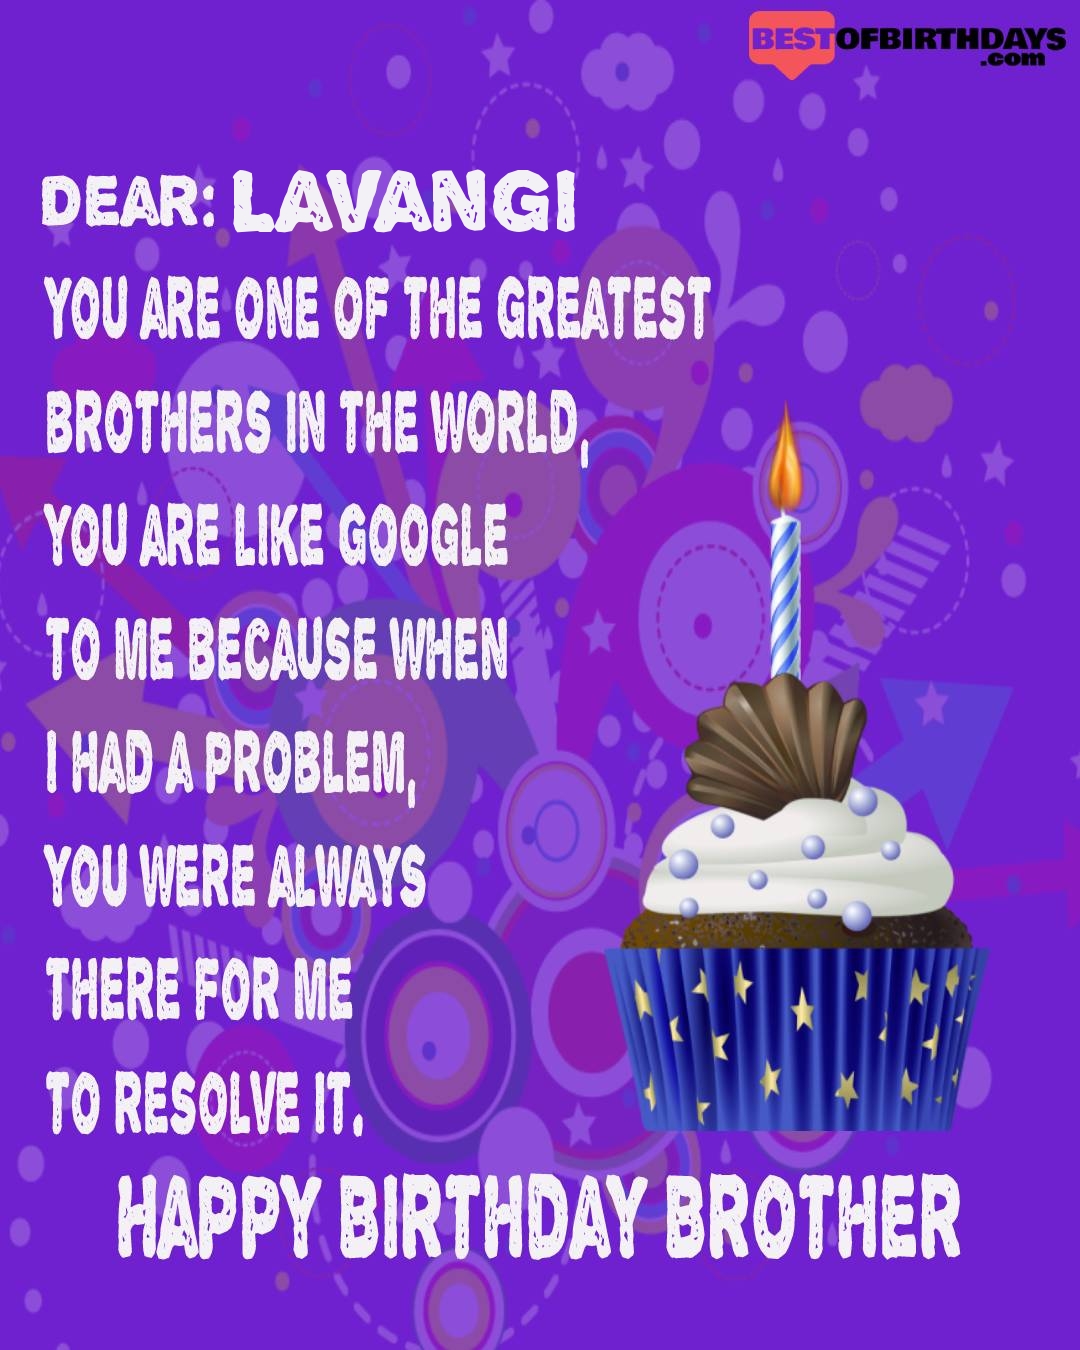 Happy birthday lavangi bhai brother bro